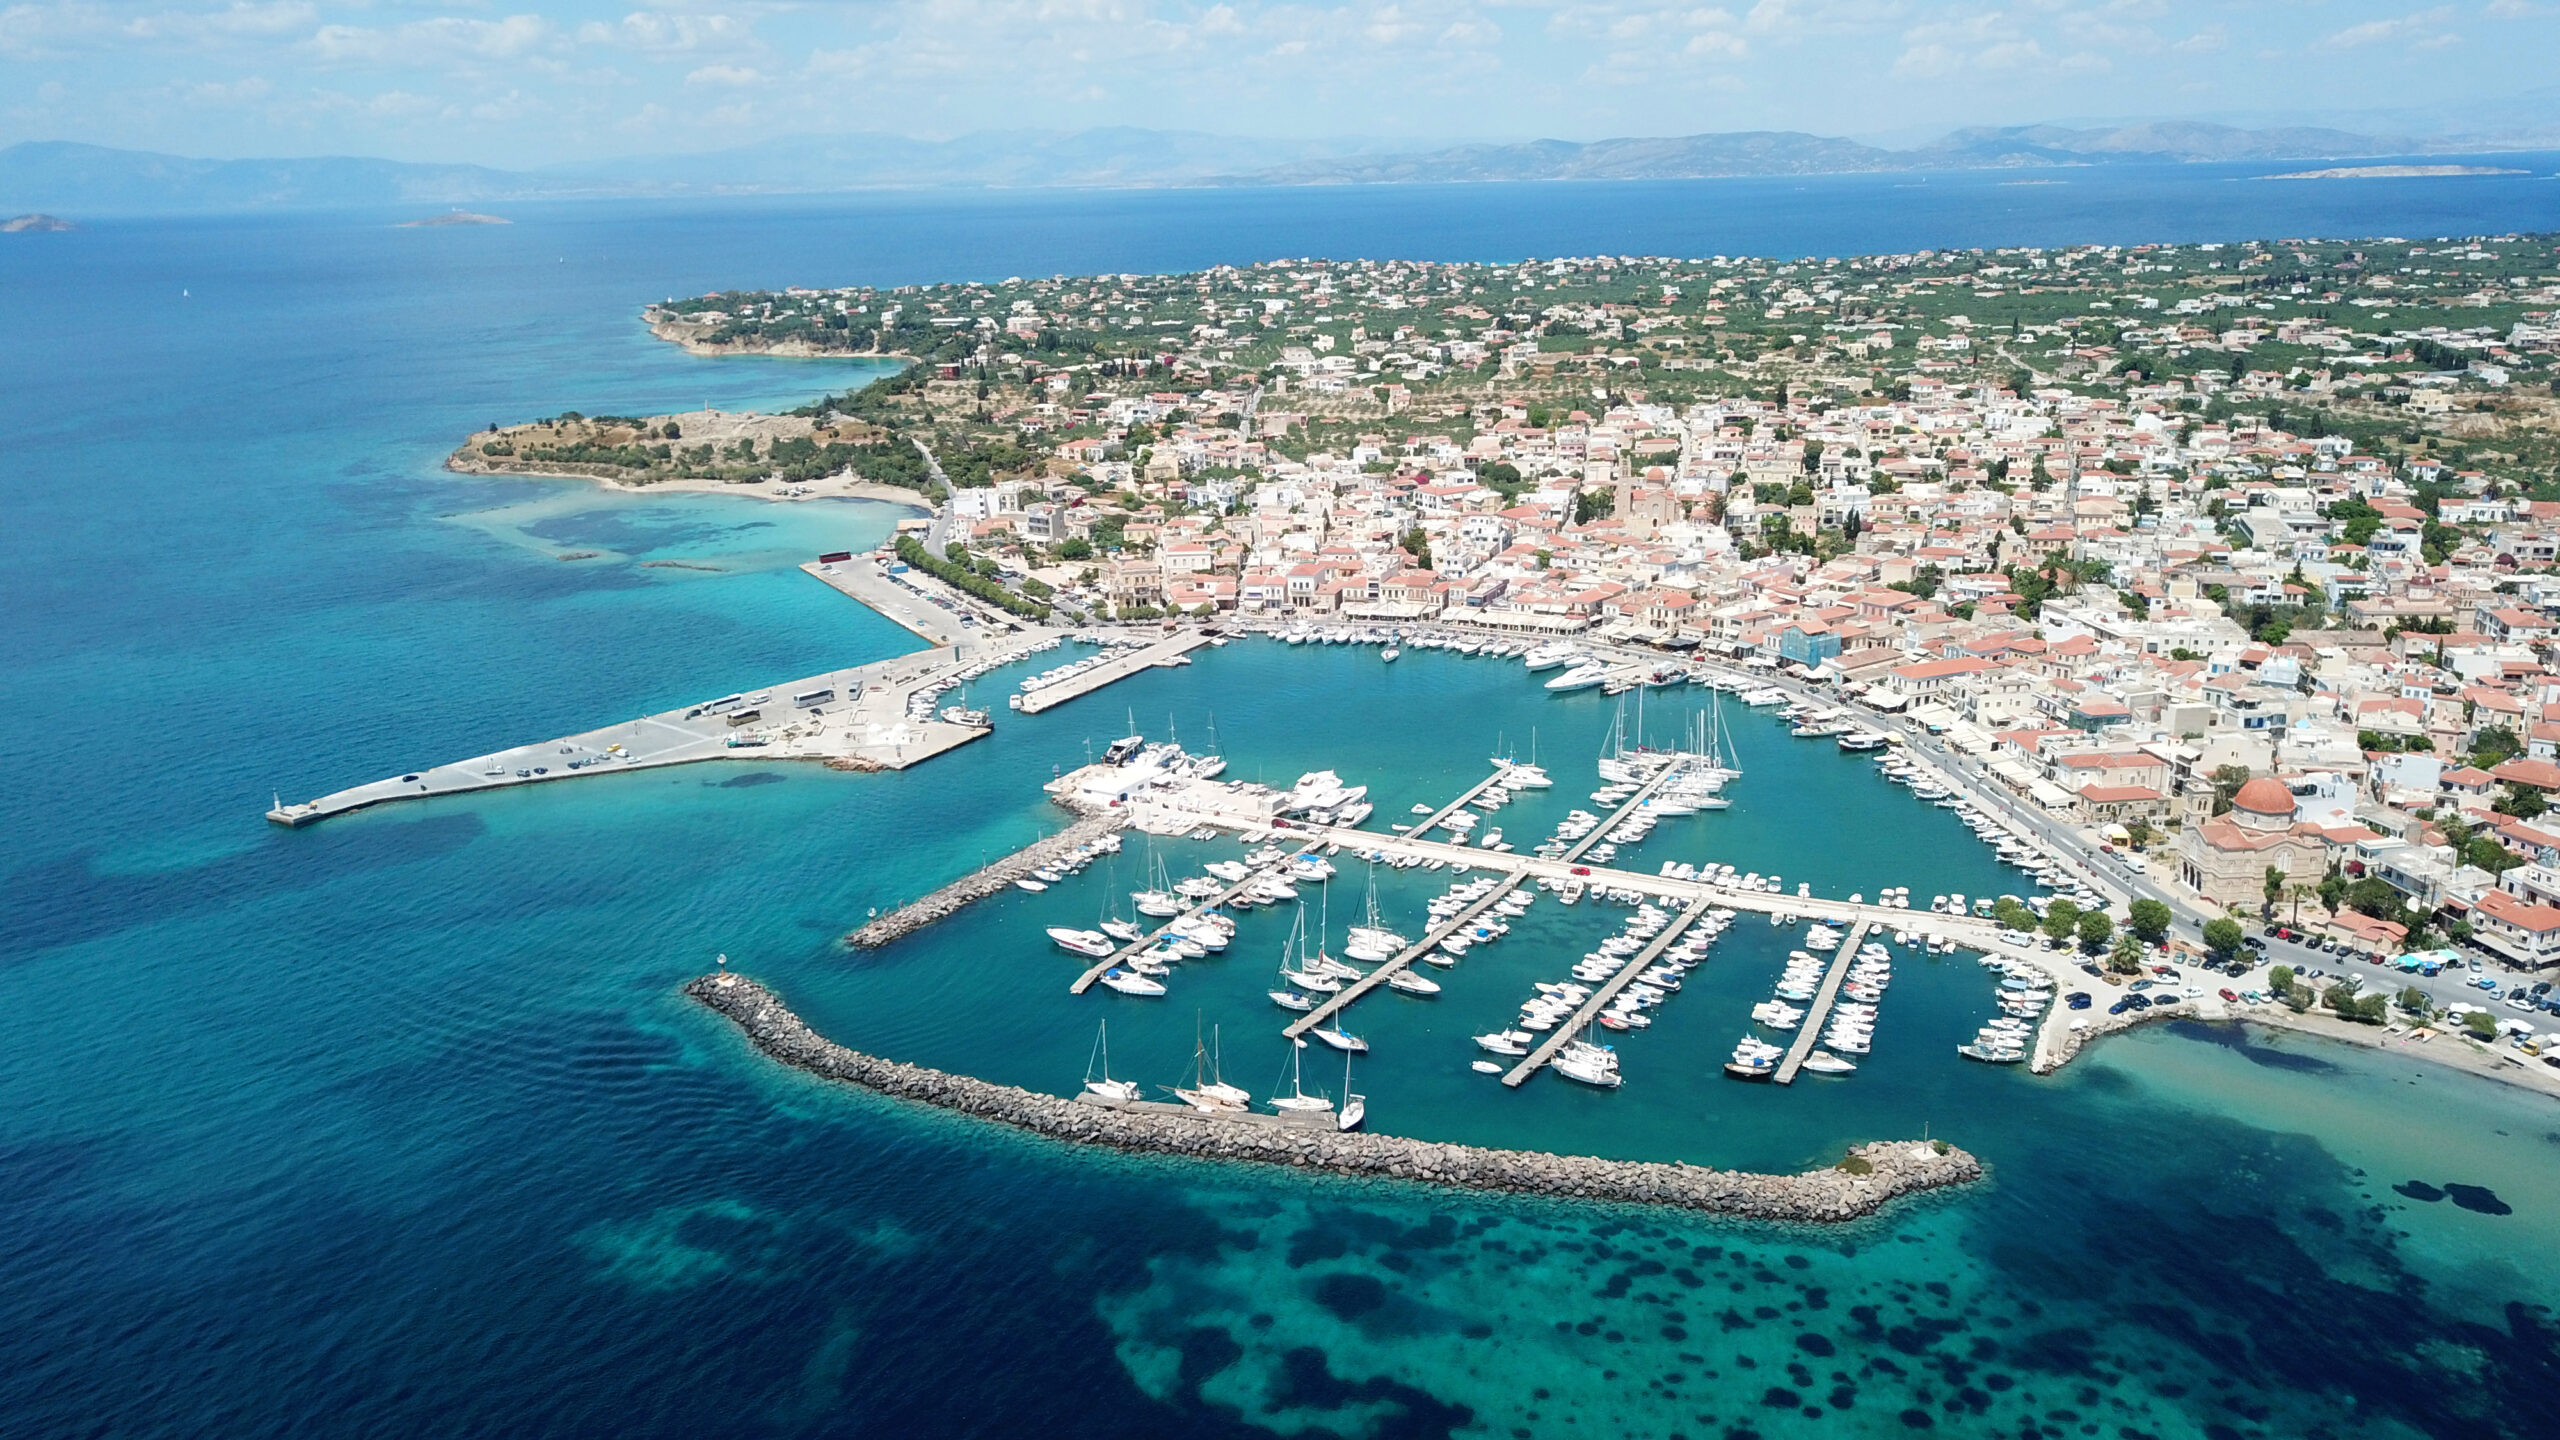 Drone view of the scenic port of Aegina island, Saronic Gulf, Greece